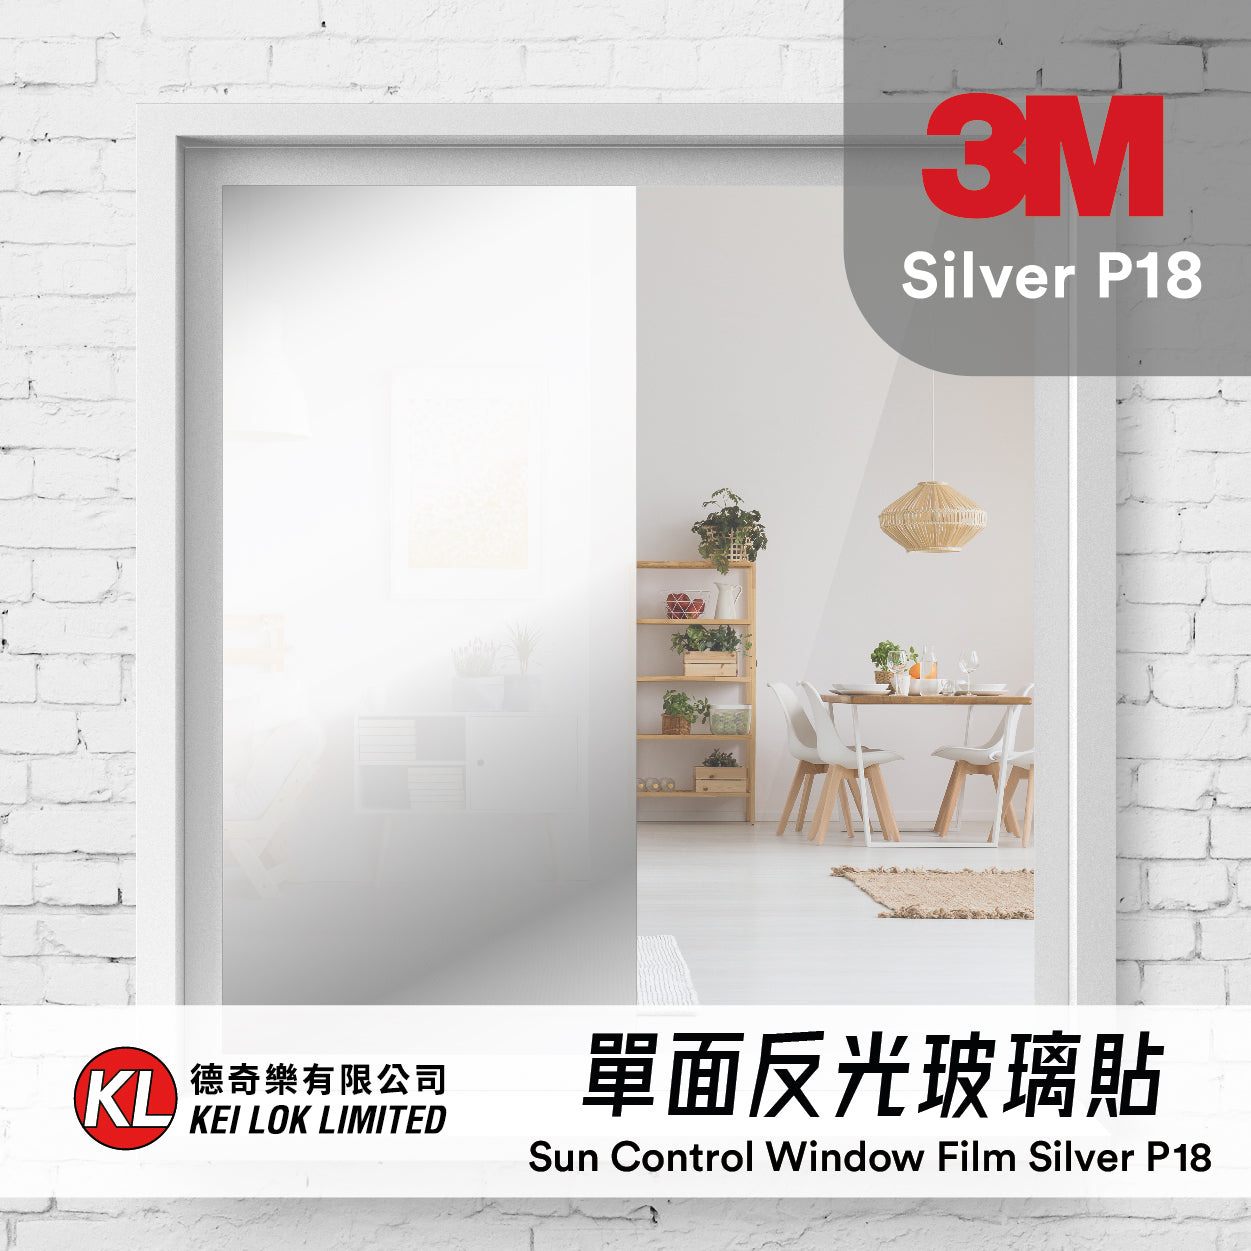 3M Sun Control Window Film Silver P18